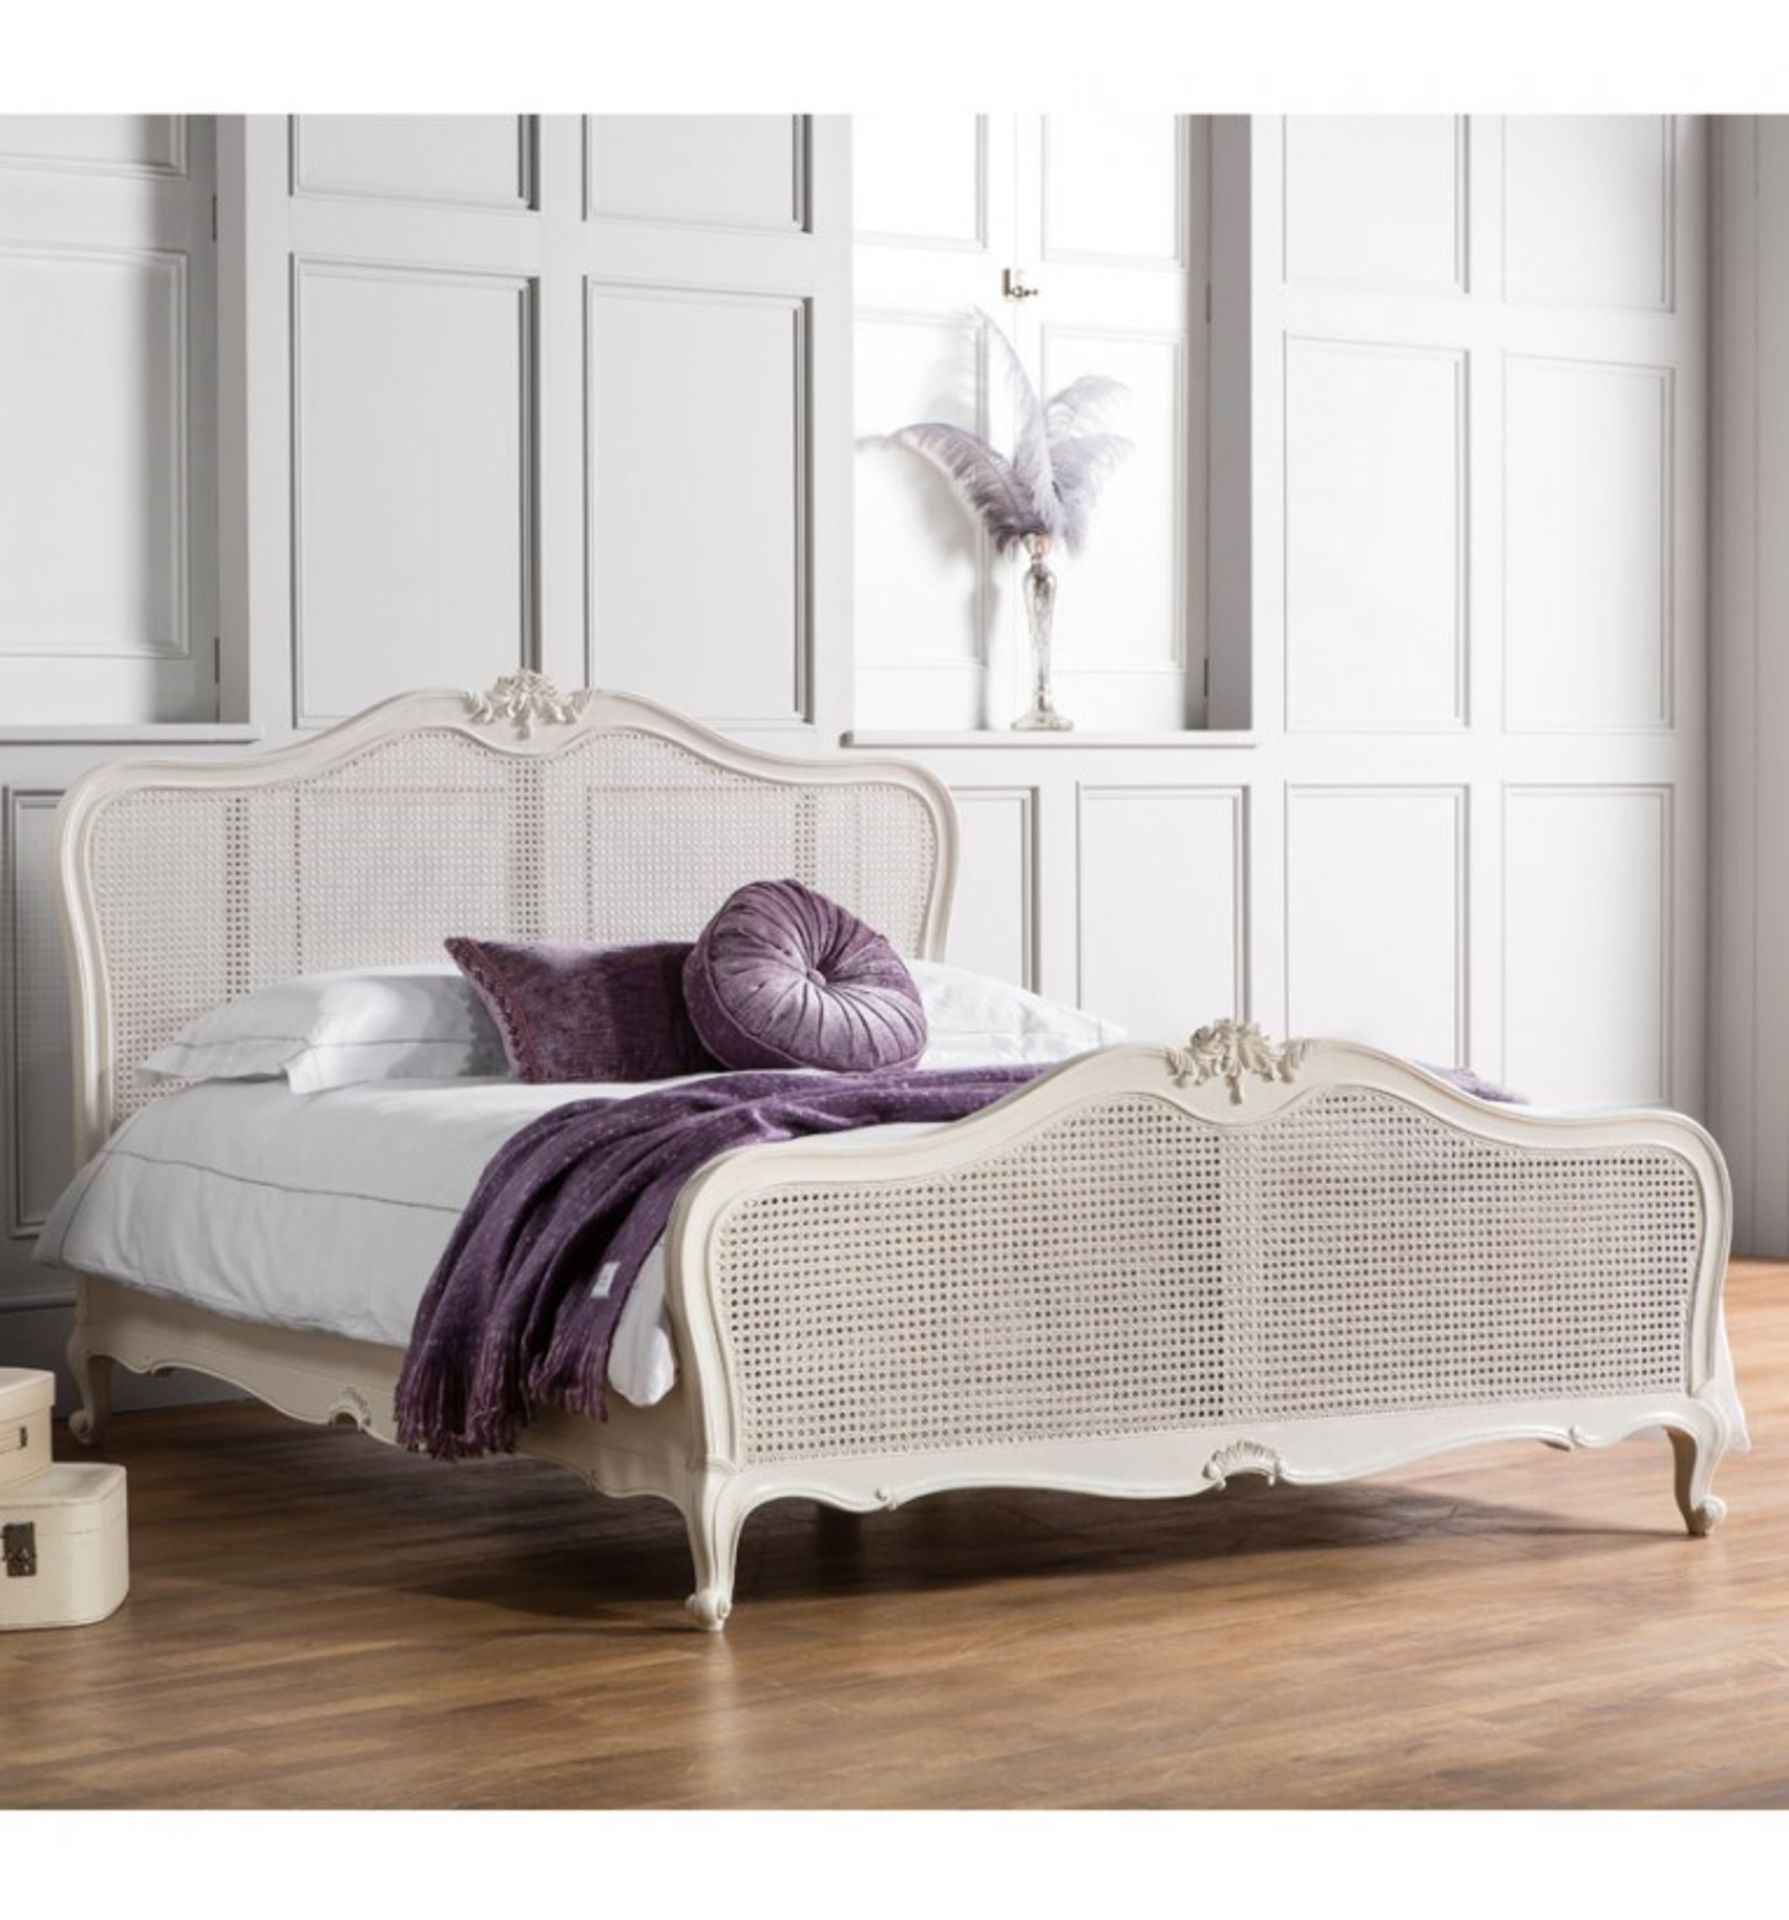 Luxury Cane Bed